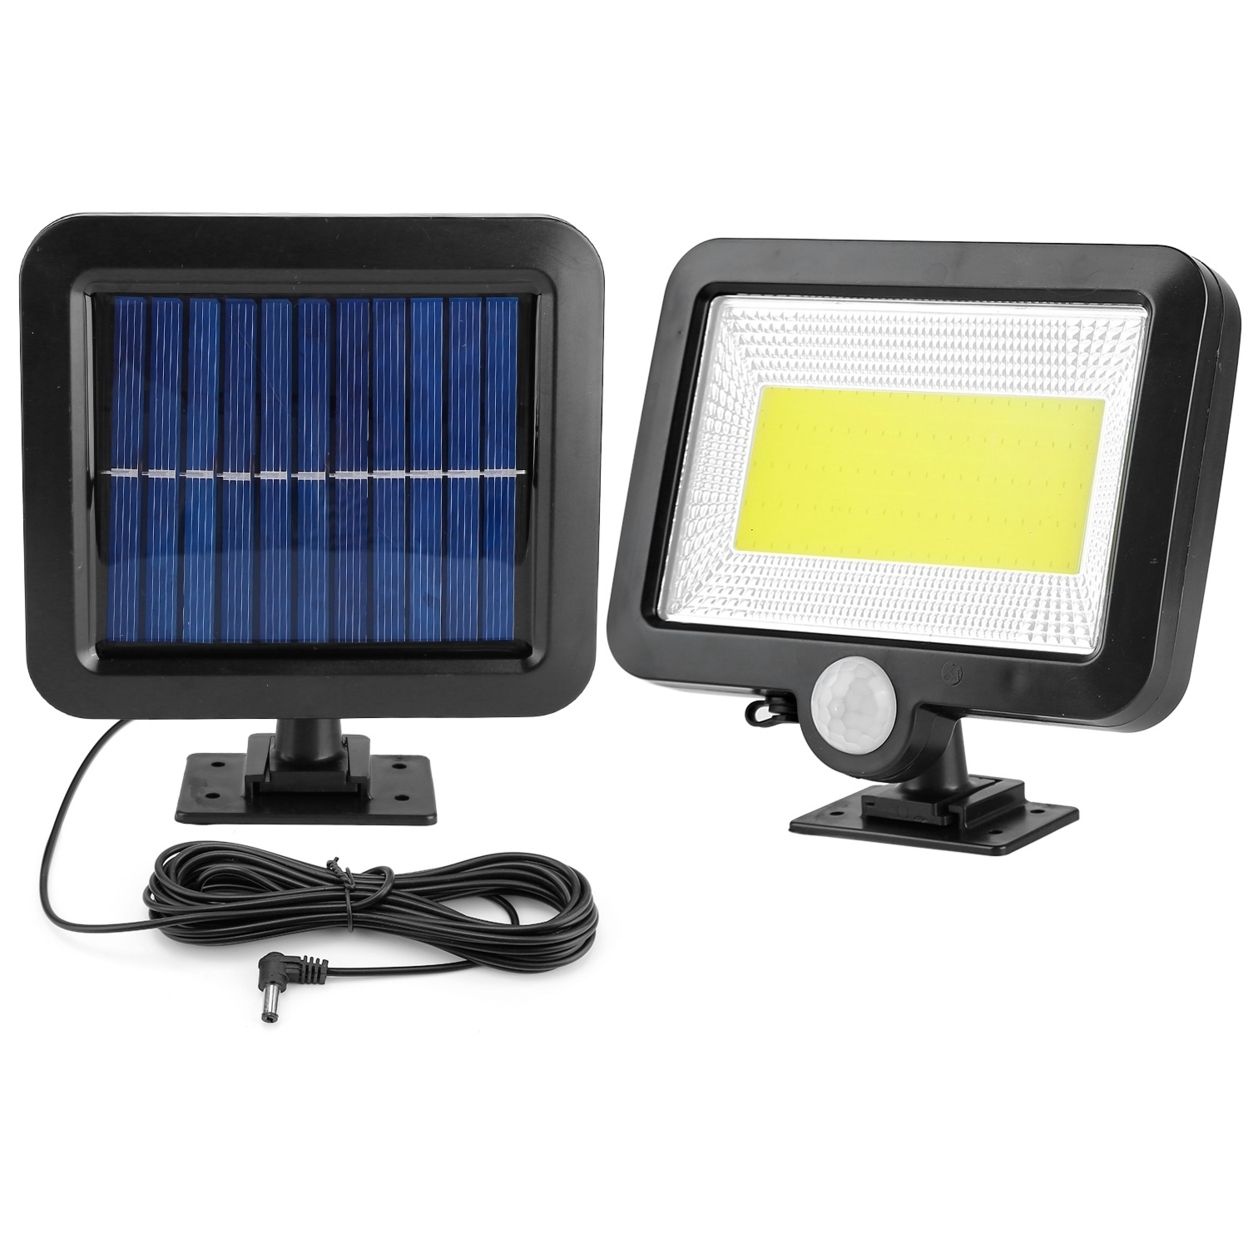 Generic Solar Powered Wall Lights Outdoor 100 LED Beads Motion Sensor Lamp IP65 Waterproof Dusk To Dawn Sensor Light For Front